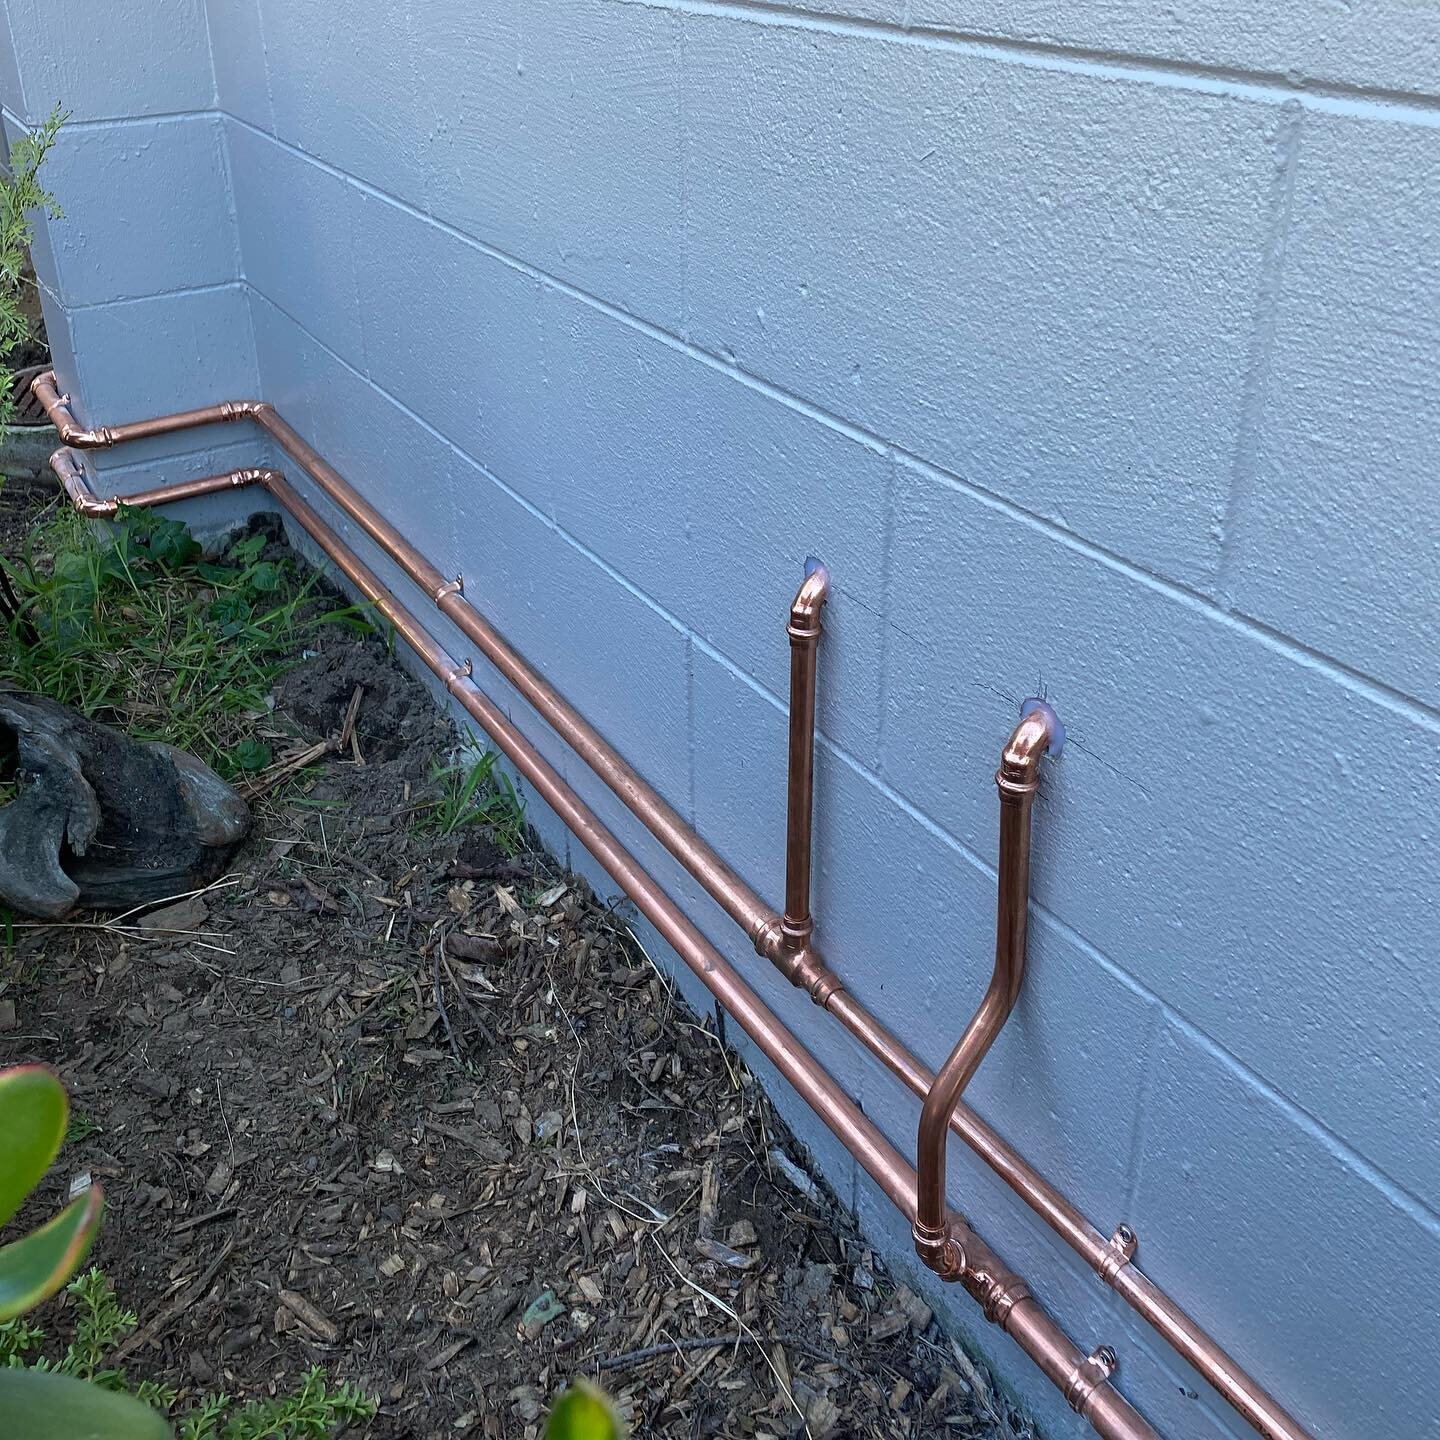 New copper pipe work we did recently 😁 

#plumbing #copper #bayofplentynz